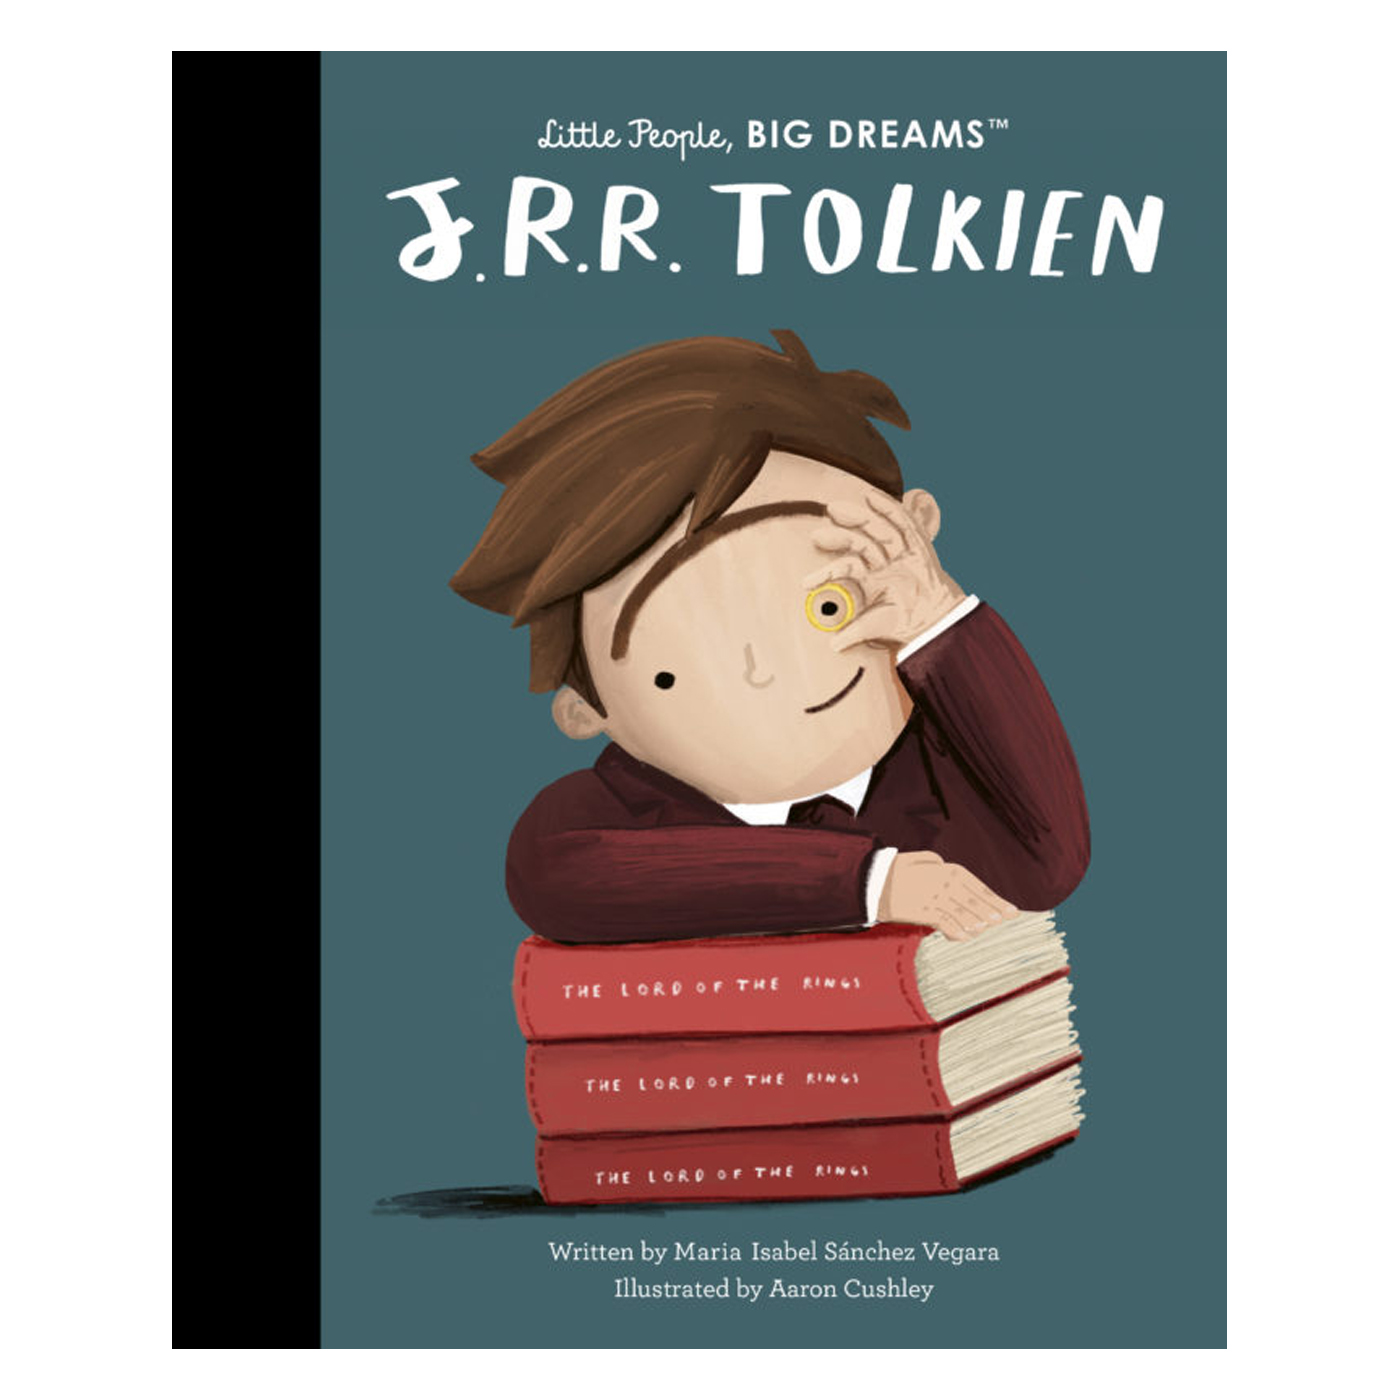  Little People Big Dreams: J. R. R. Tolkien